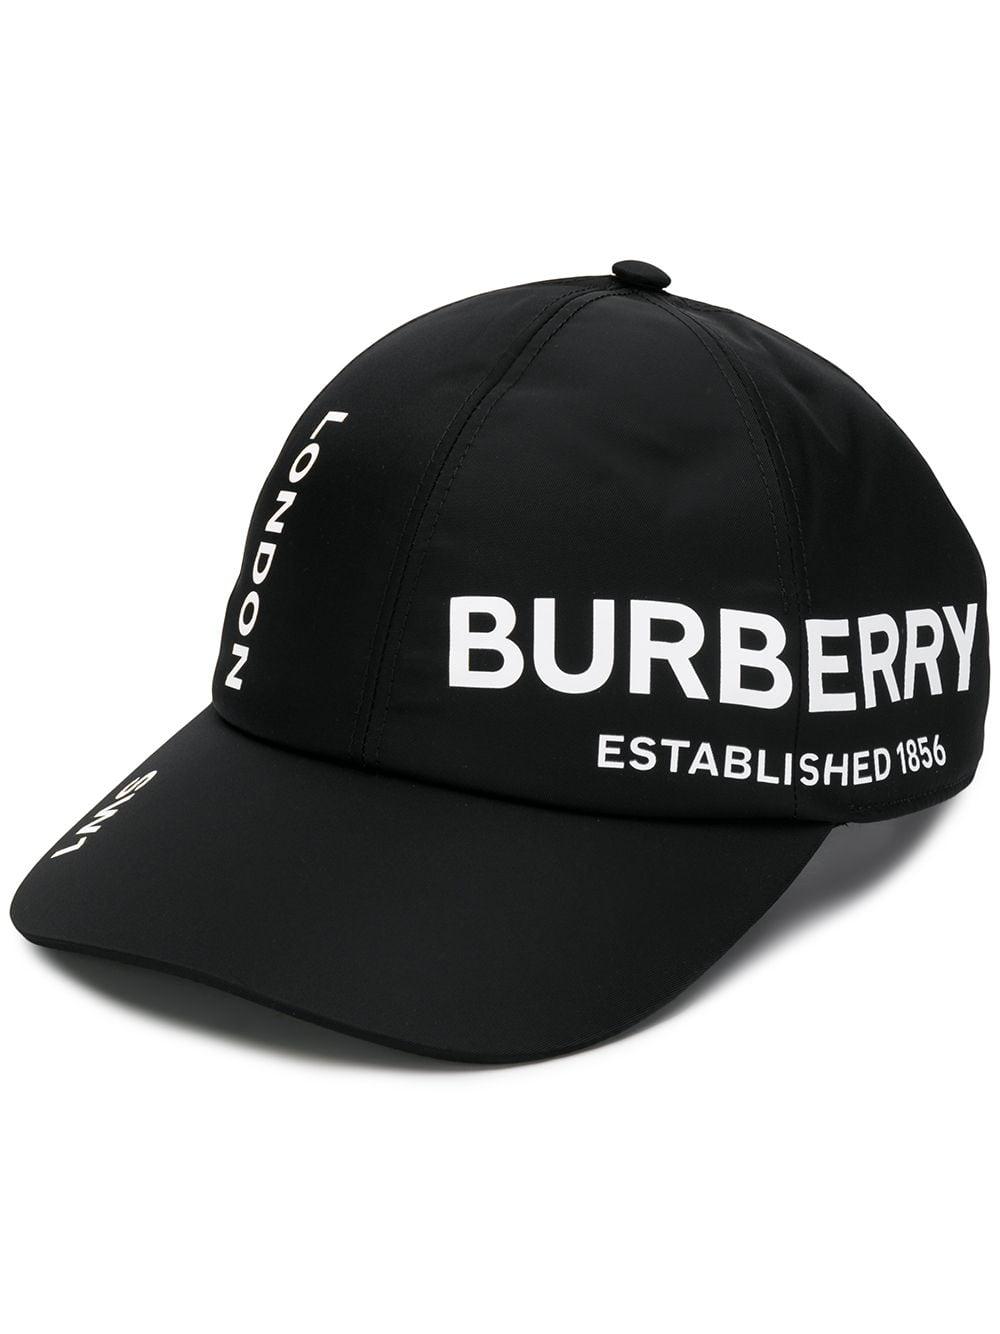 Burberry Synthetic Logo Baseball Cap in Black for Men - Lyst